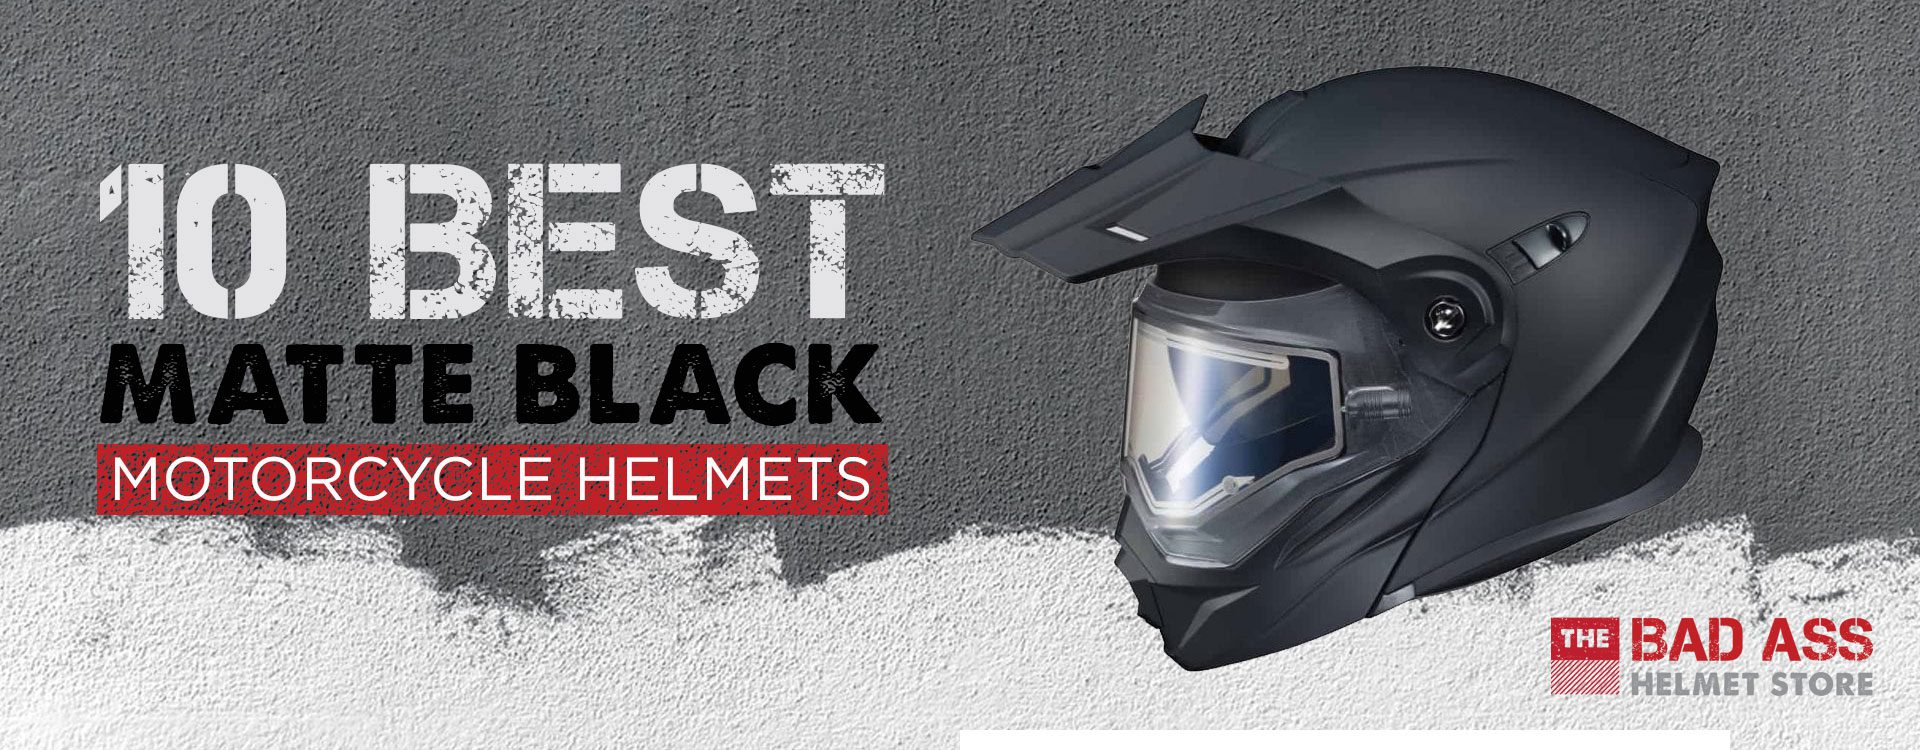 10 Best Matte Black Motorcycle Helmets